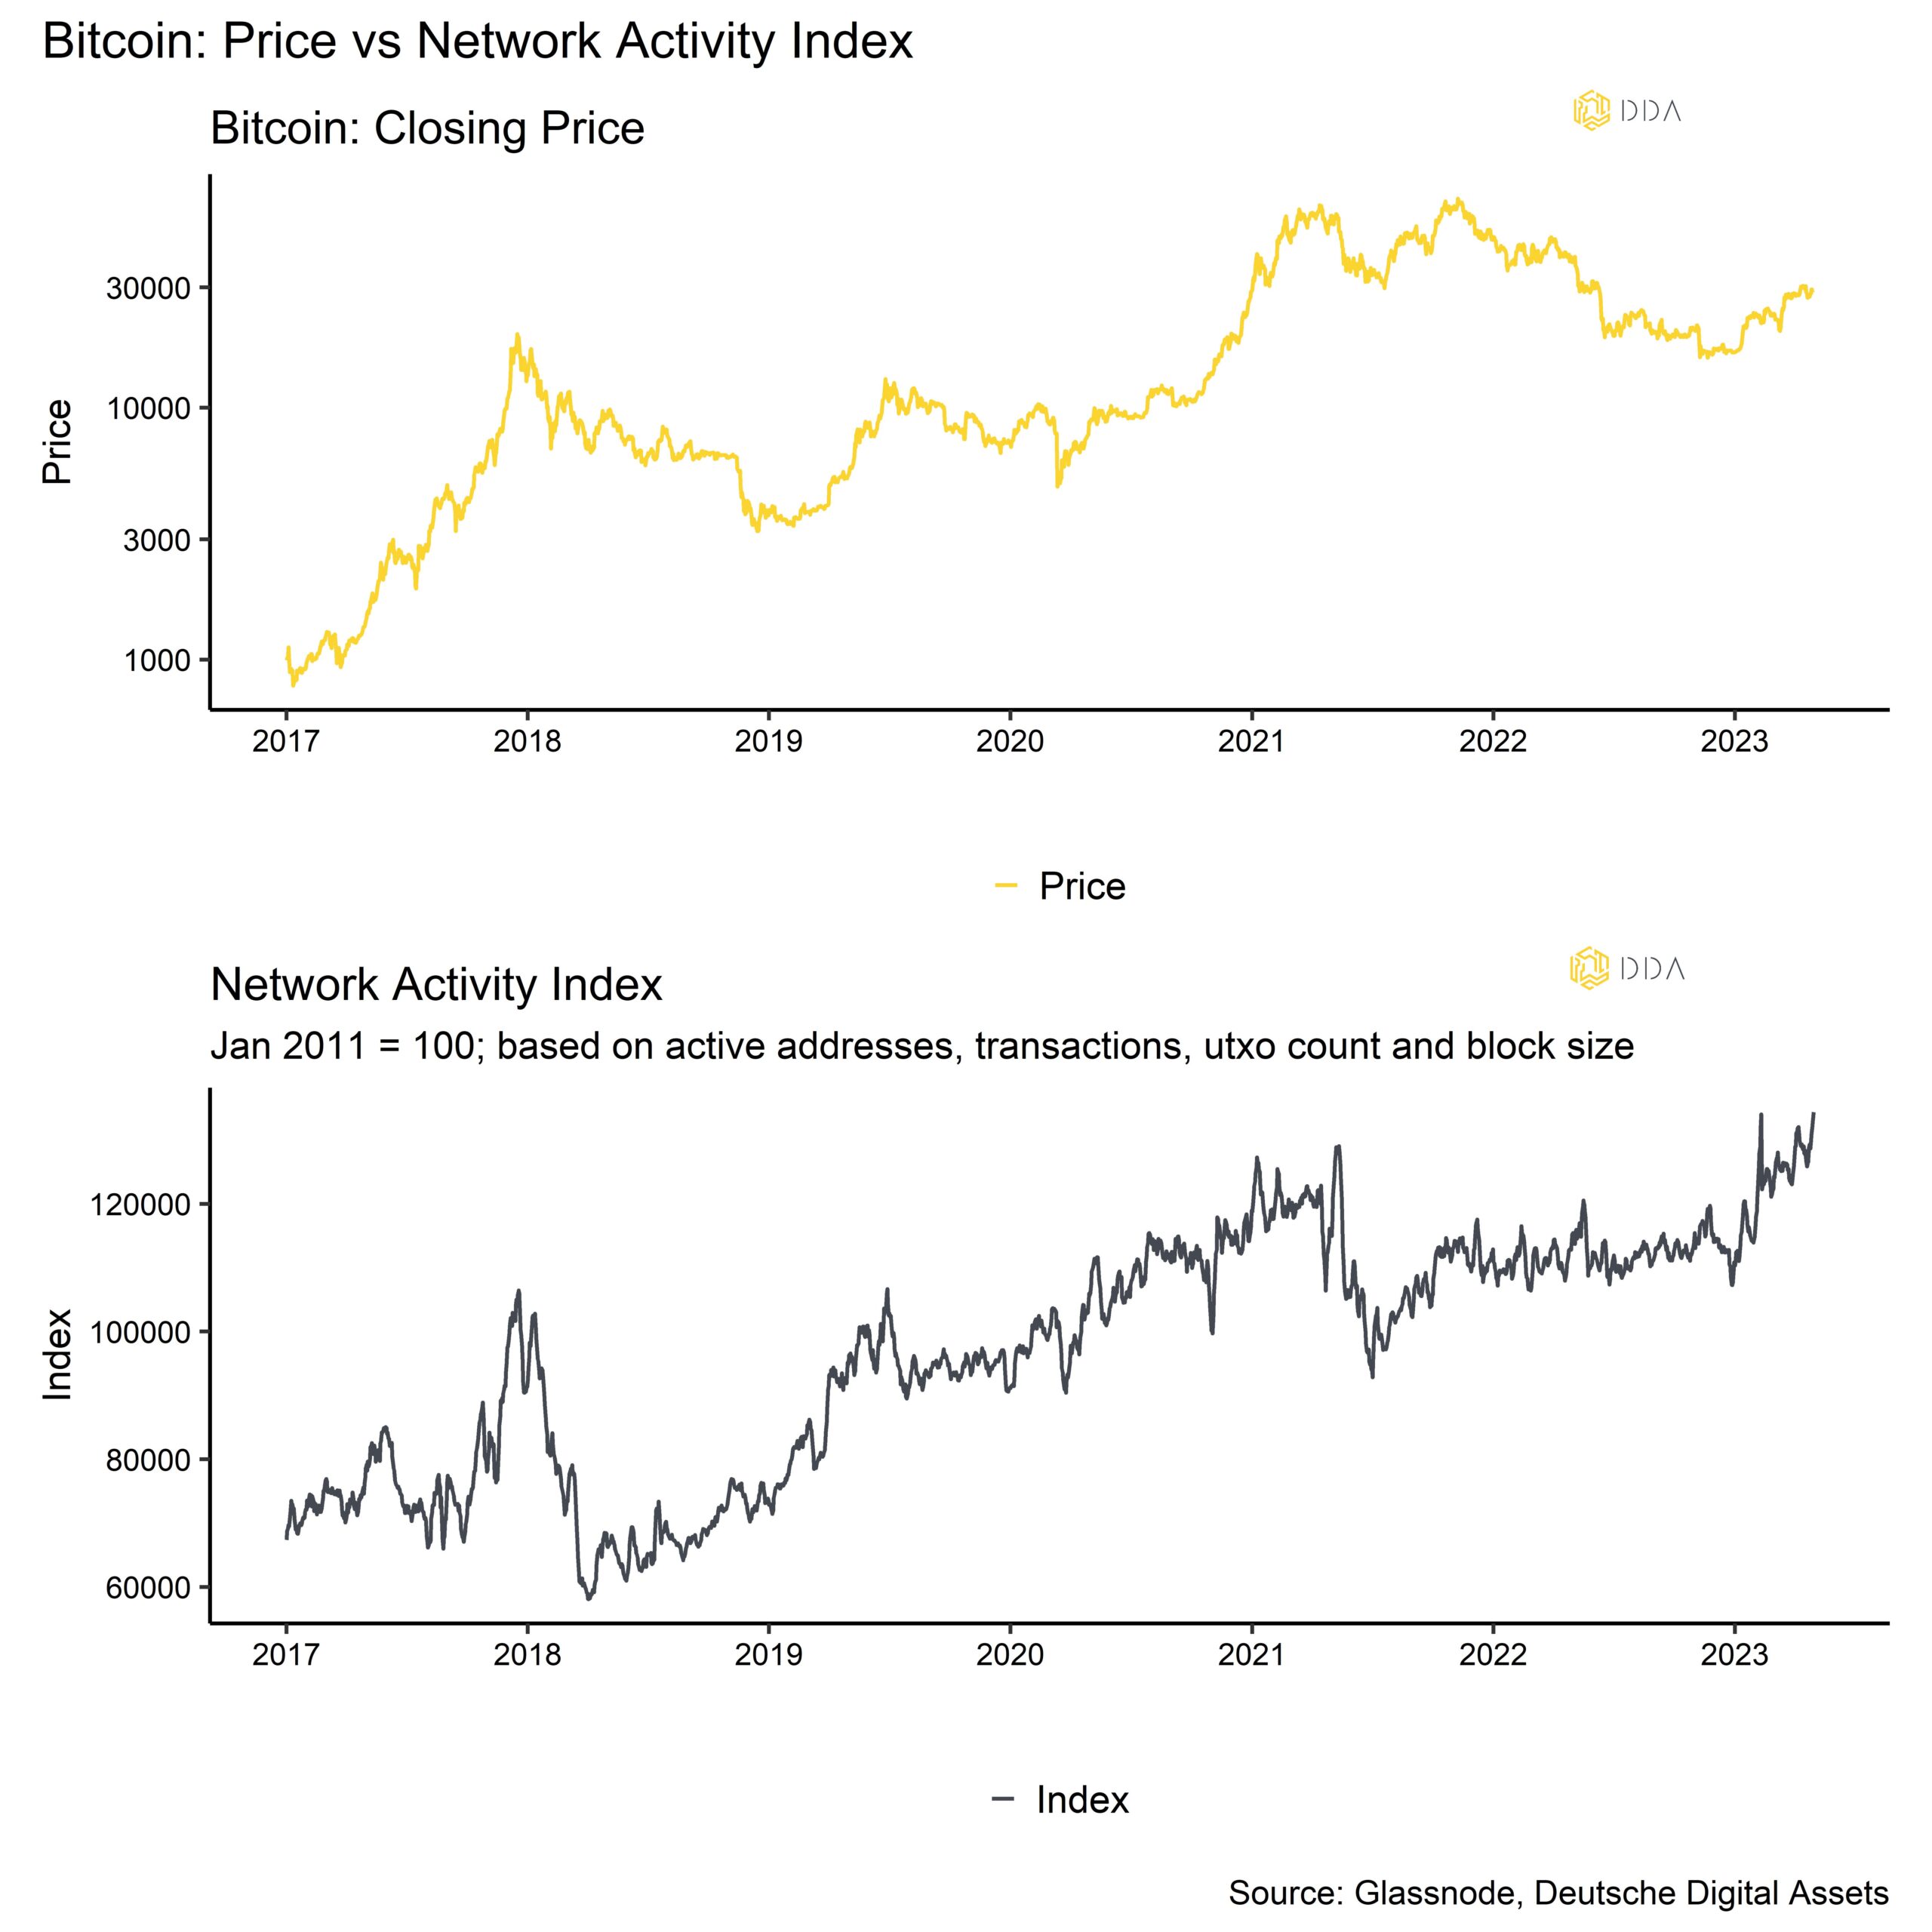 Bitcoin price vs Network Activity Index 